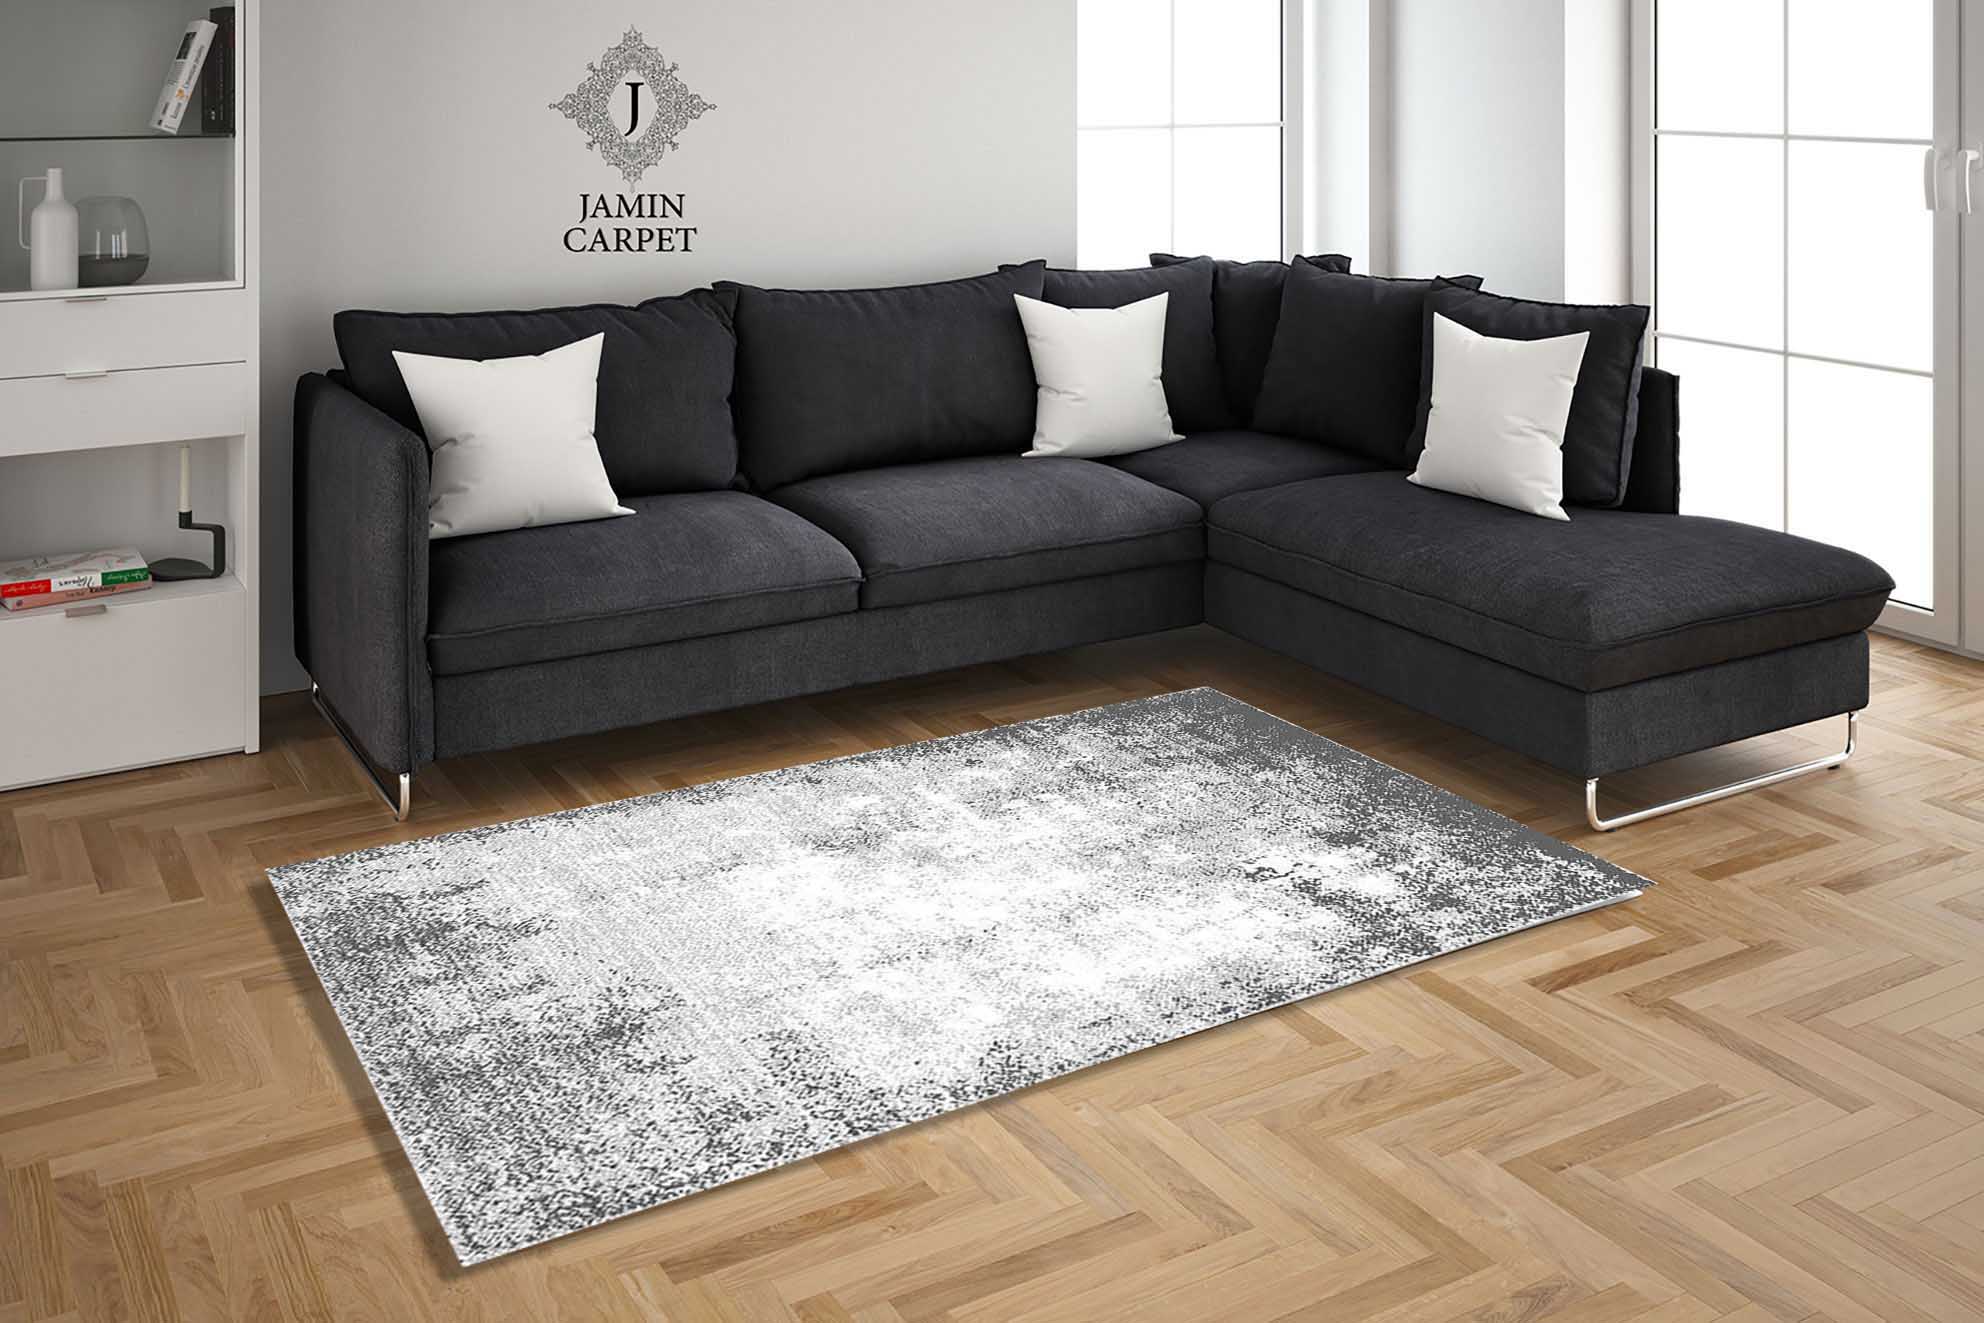 Fantasy carpet, code 273, comb 400, density 1800, all acrylic